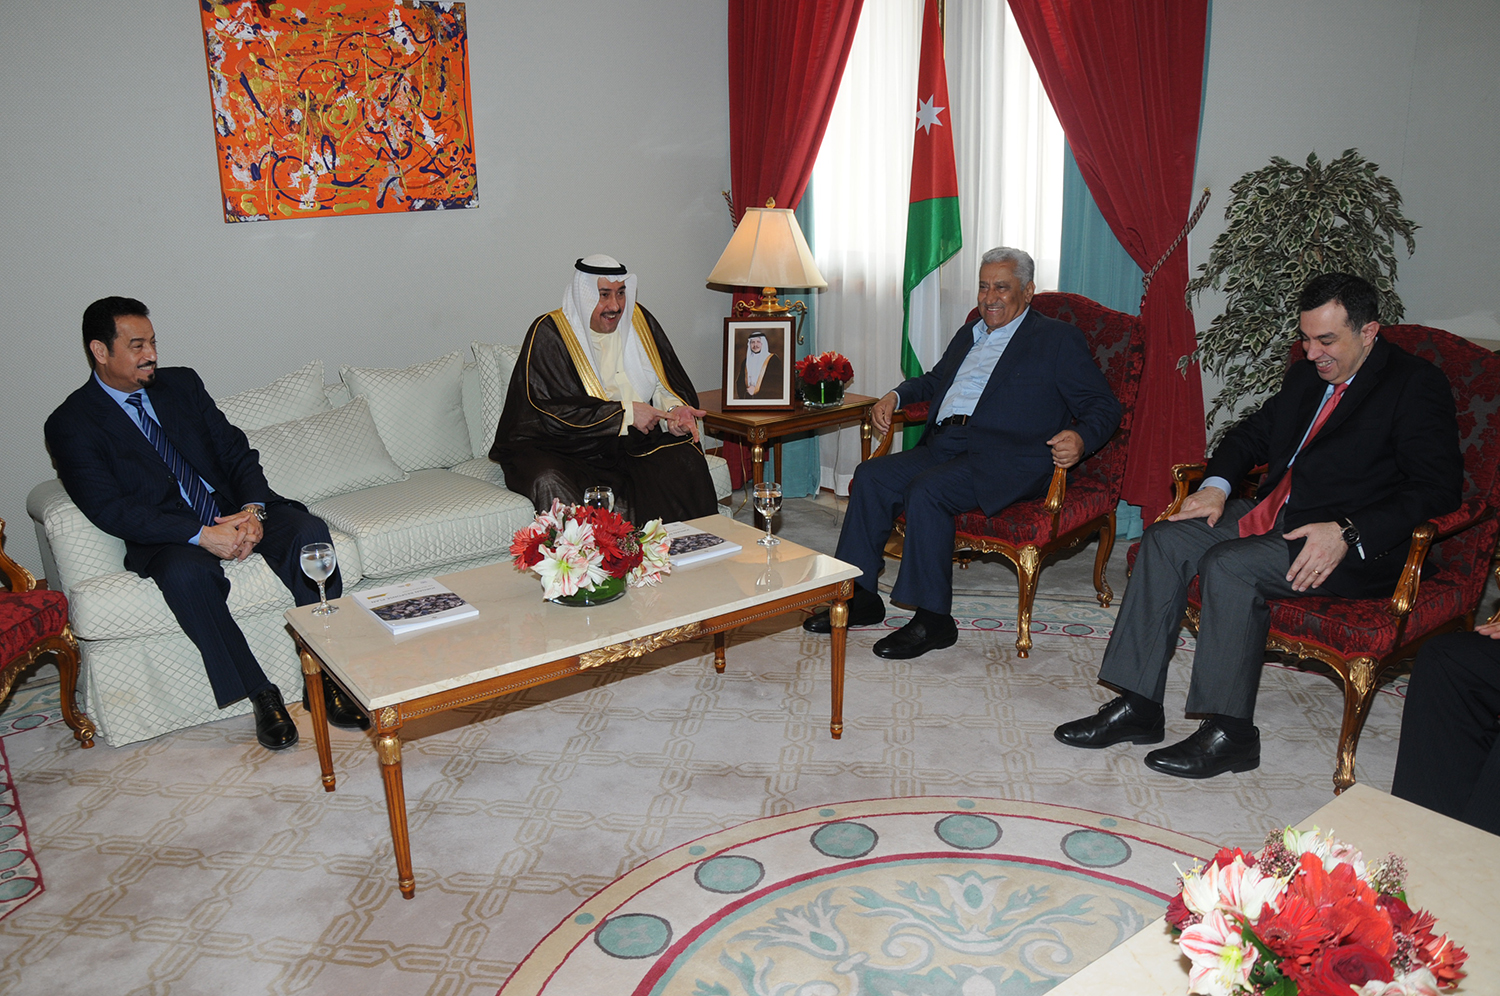 Jordanian Prime Minister Abdullah Ensour received Farwaniya Governor Sheikh Faisal Al-Humoud Al-Malek Al-Sabah